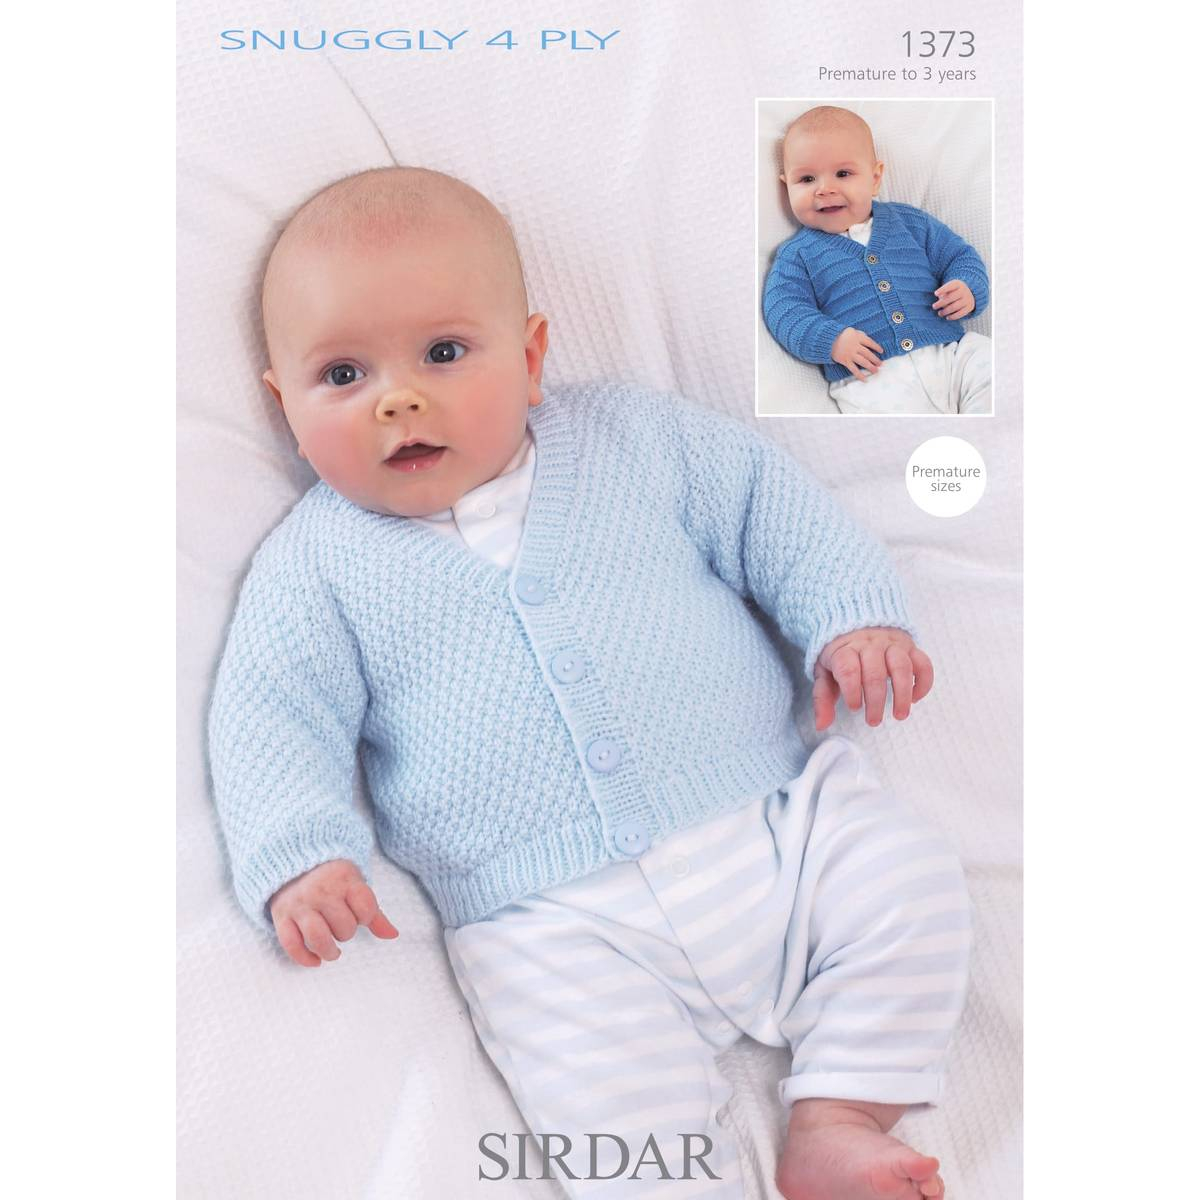 Sirdar Snuggly Knitting Patterns Sirdar Snuggly 4 Ply Cardigans Digital Pattern 1373